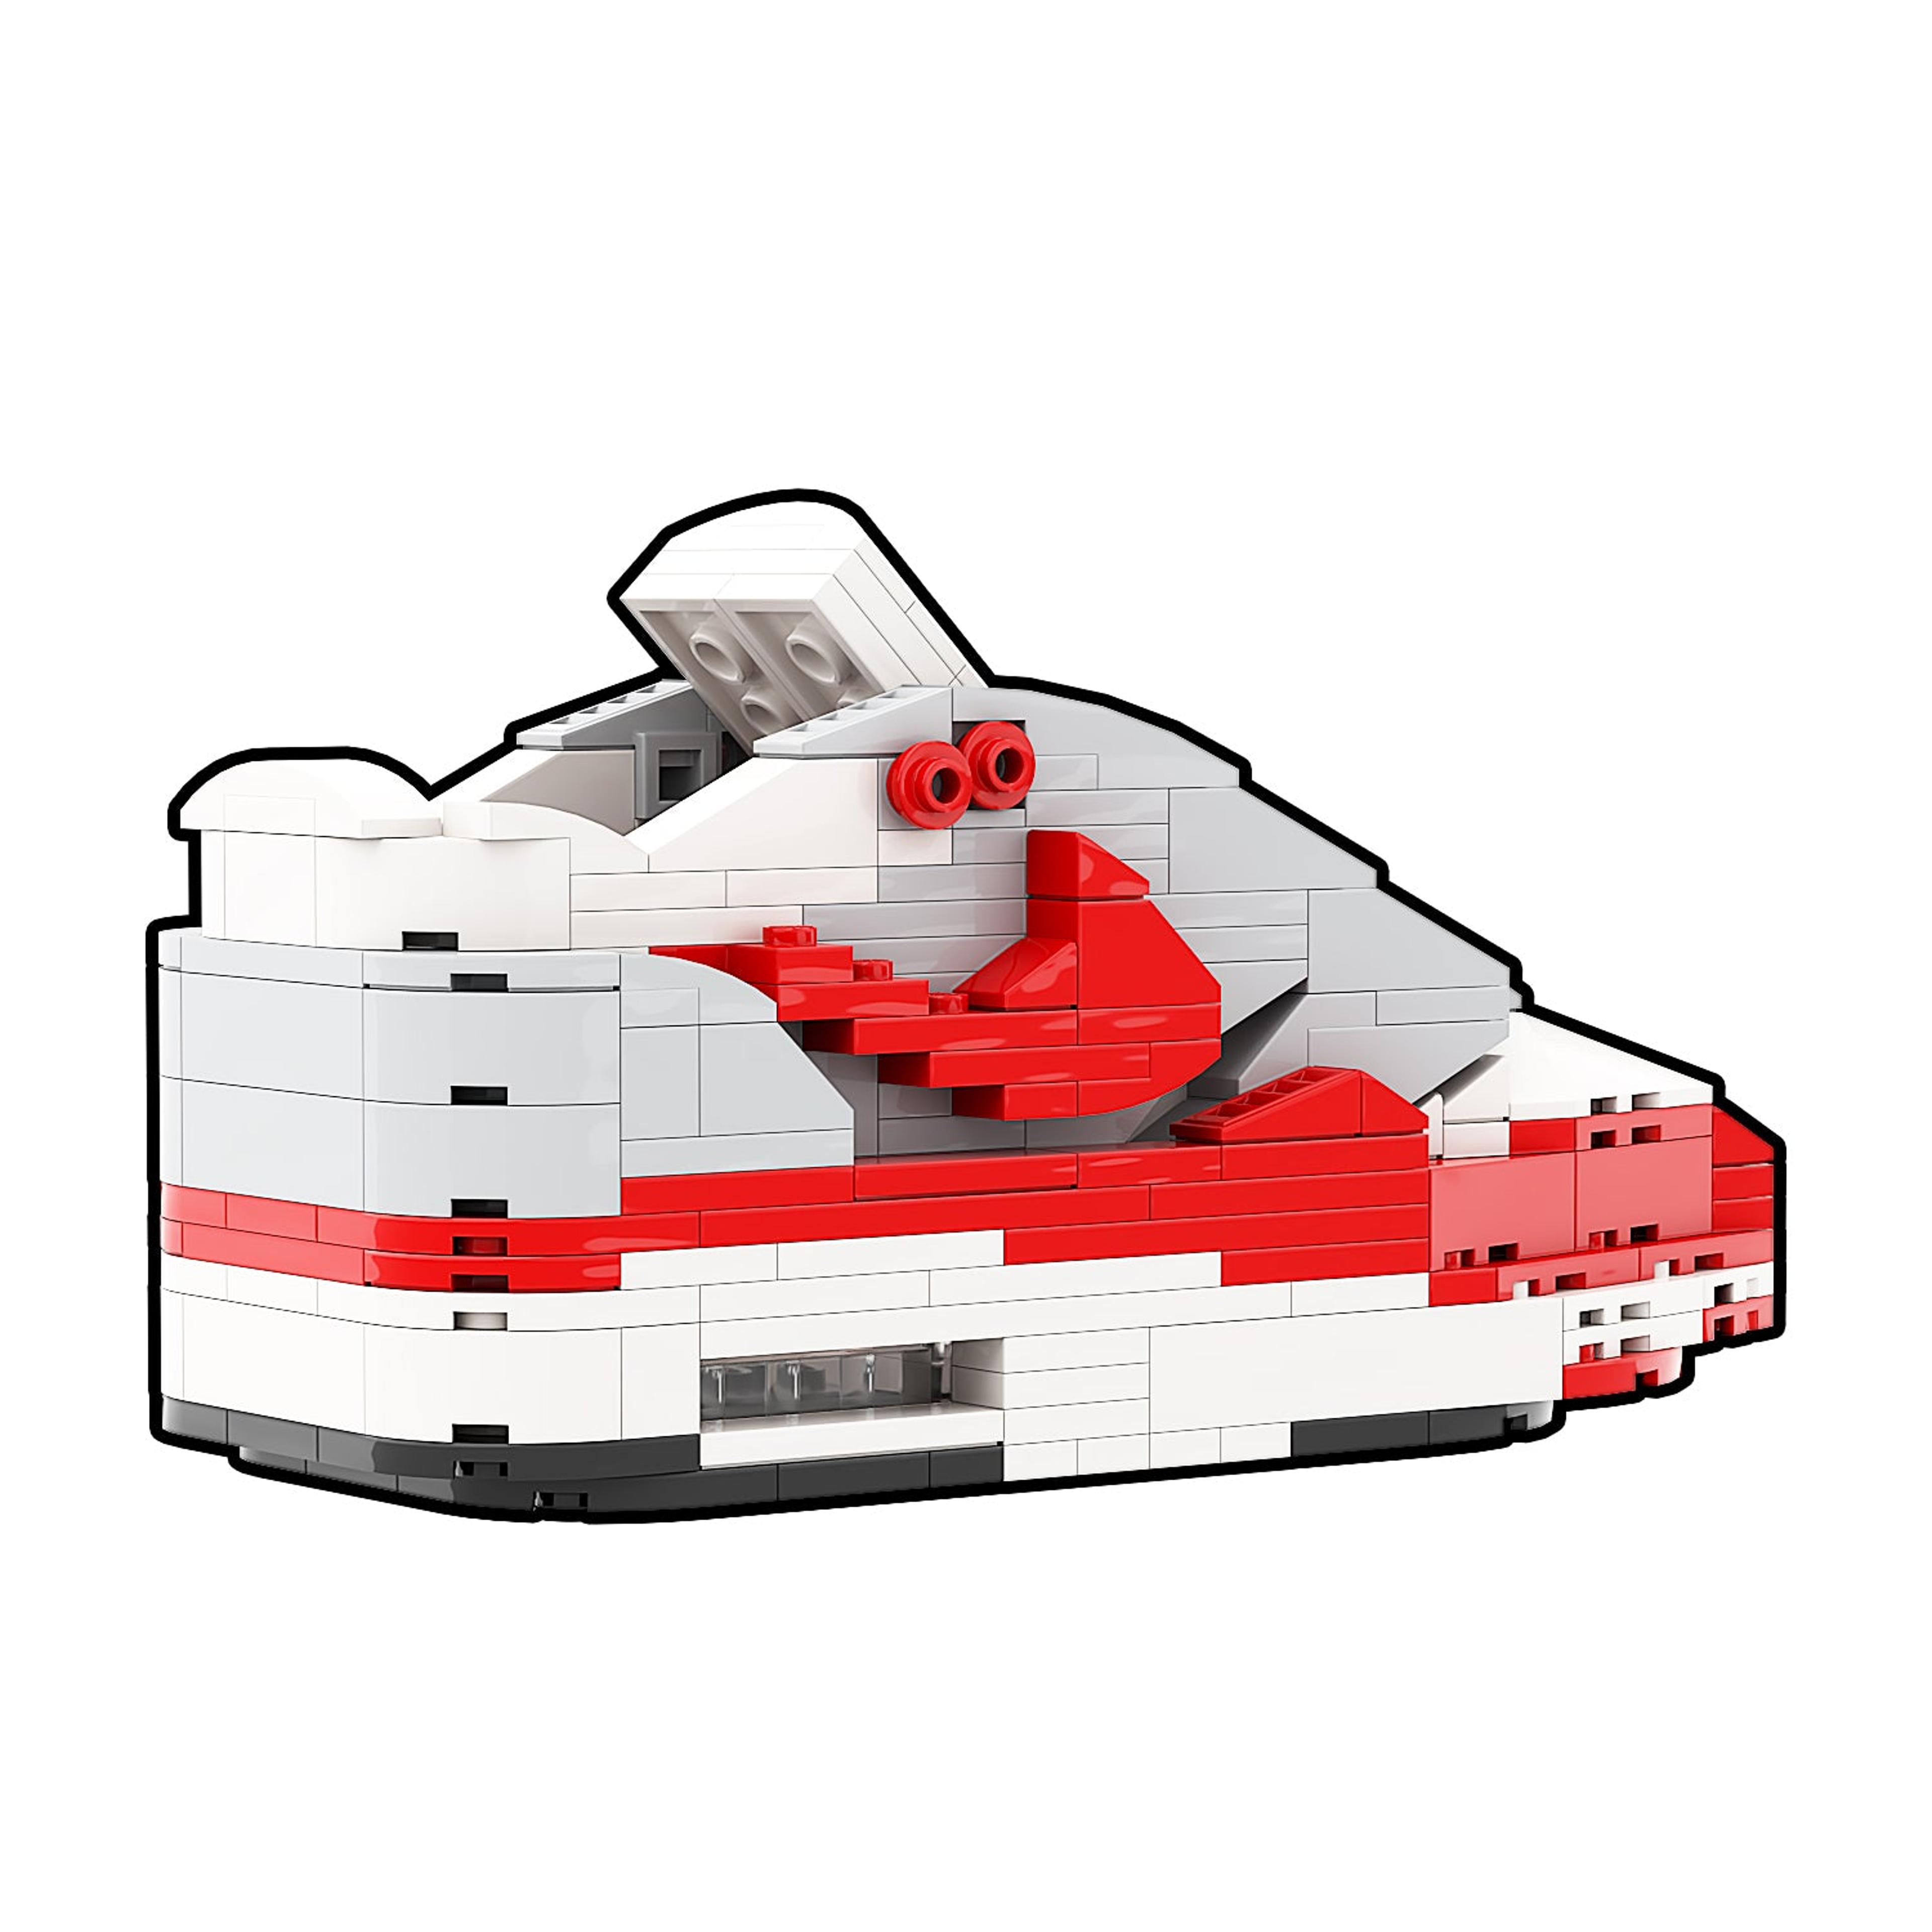 Alternate View 7 of REGULAR "Air Max 1 OG" Sneaker Bricks with Mini Figure